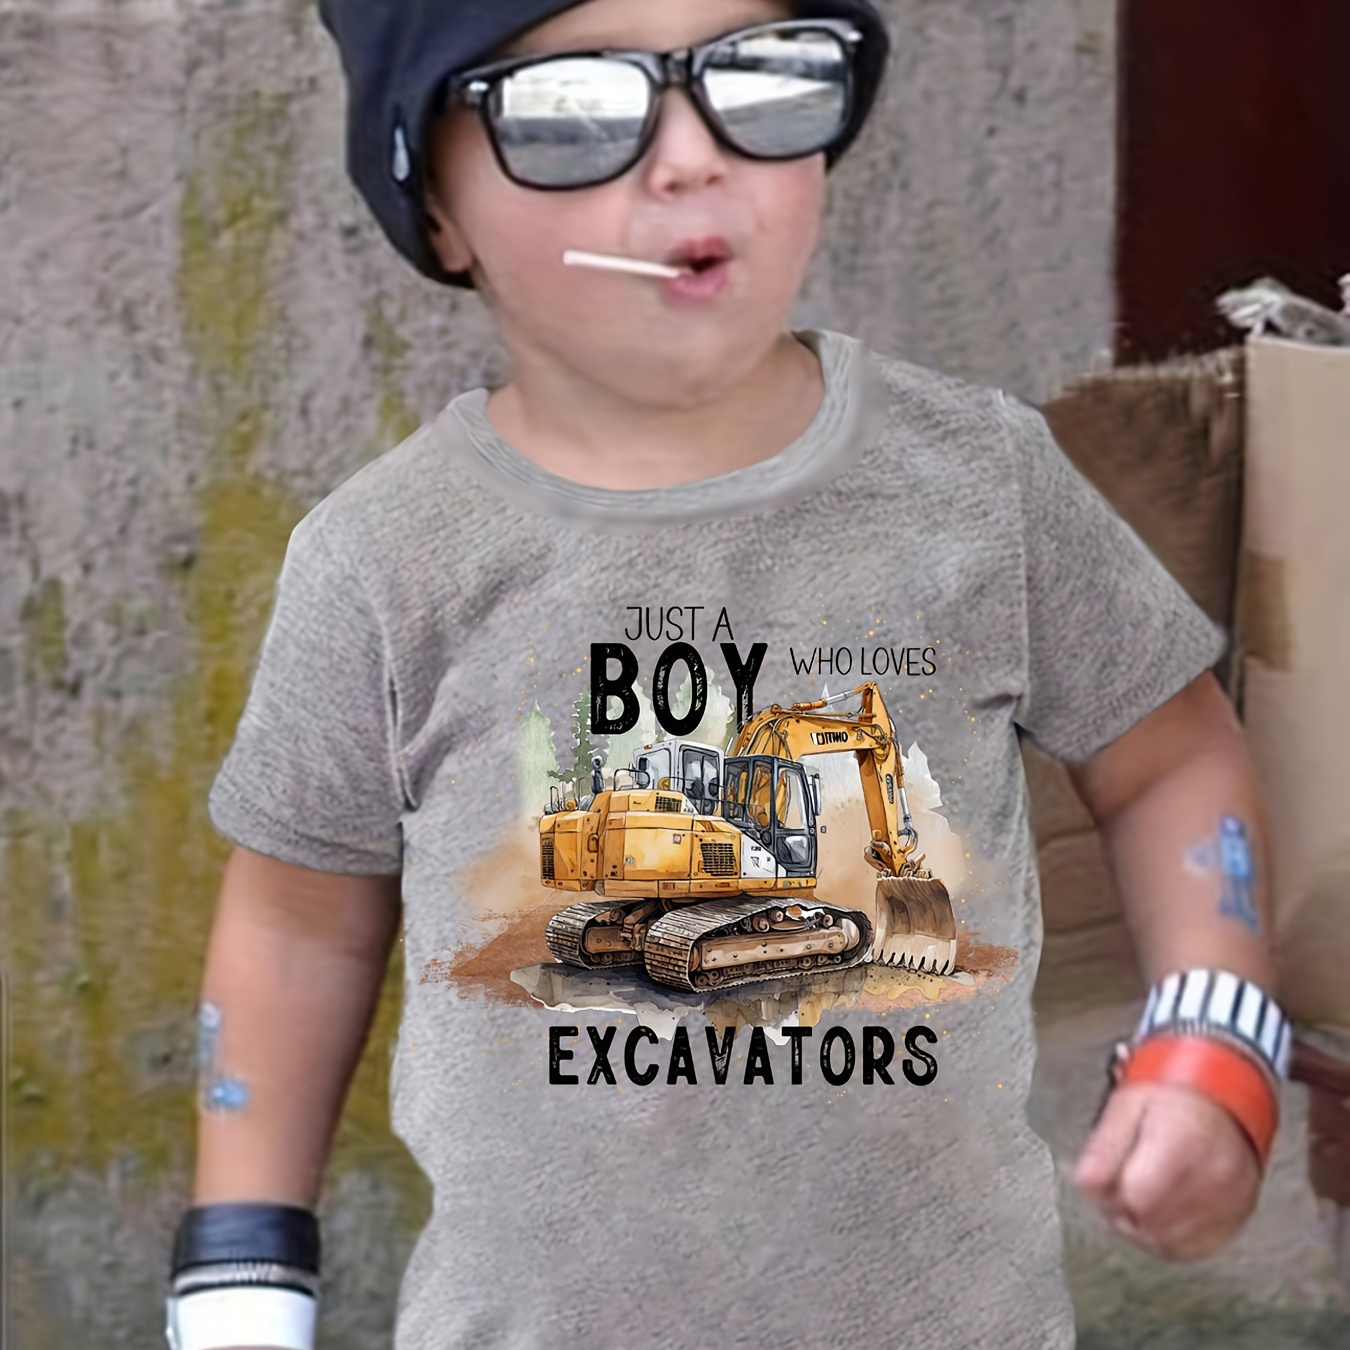 

Pure Cotton - Casual Versatile Boys' Summer Tops - Letters & Excavator Print Short Sleeve Crew Neck T-shirt Trendy Gift